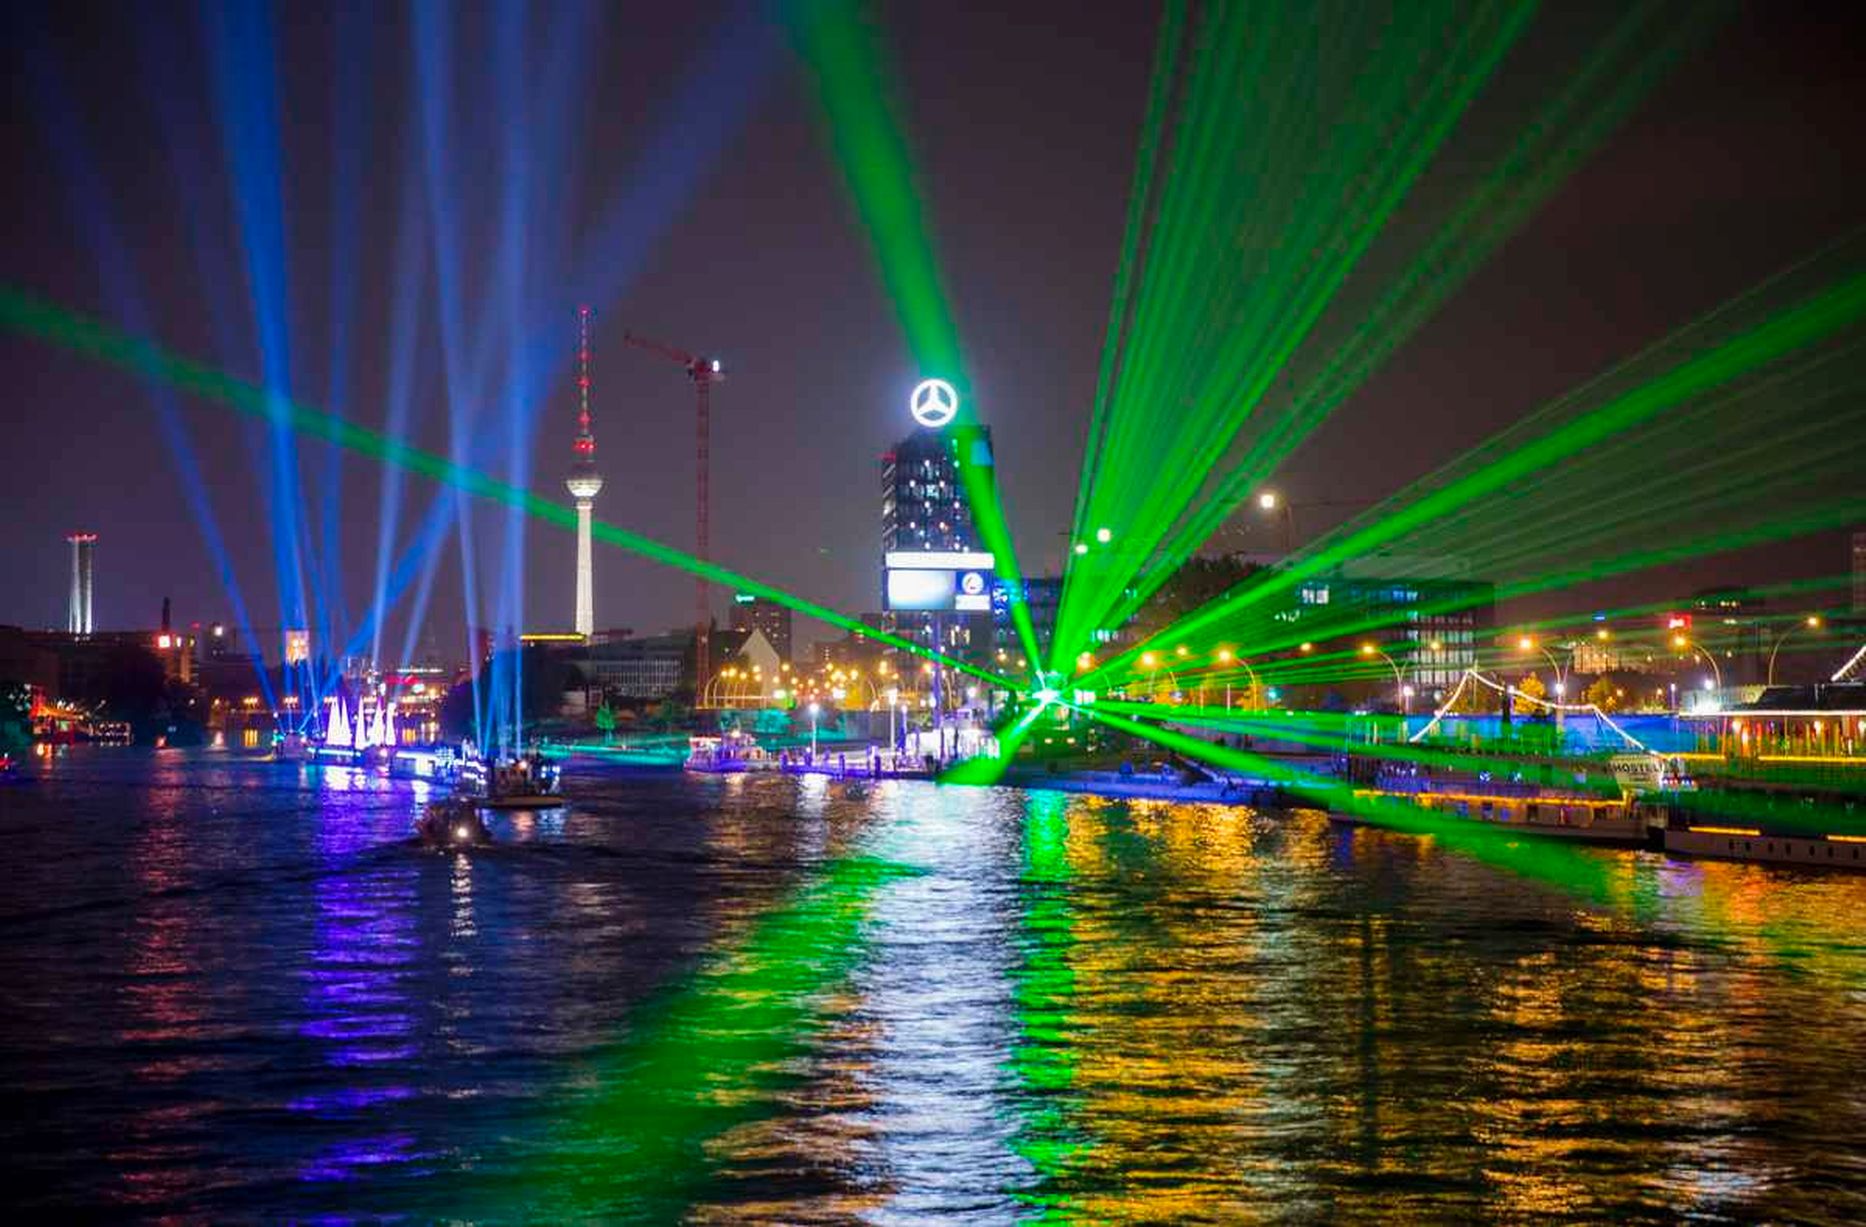 The Berlin Festival of Lights